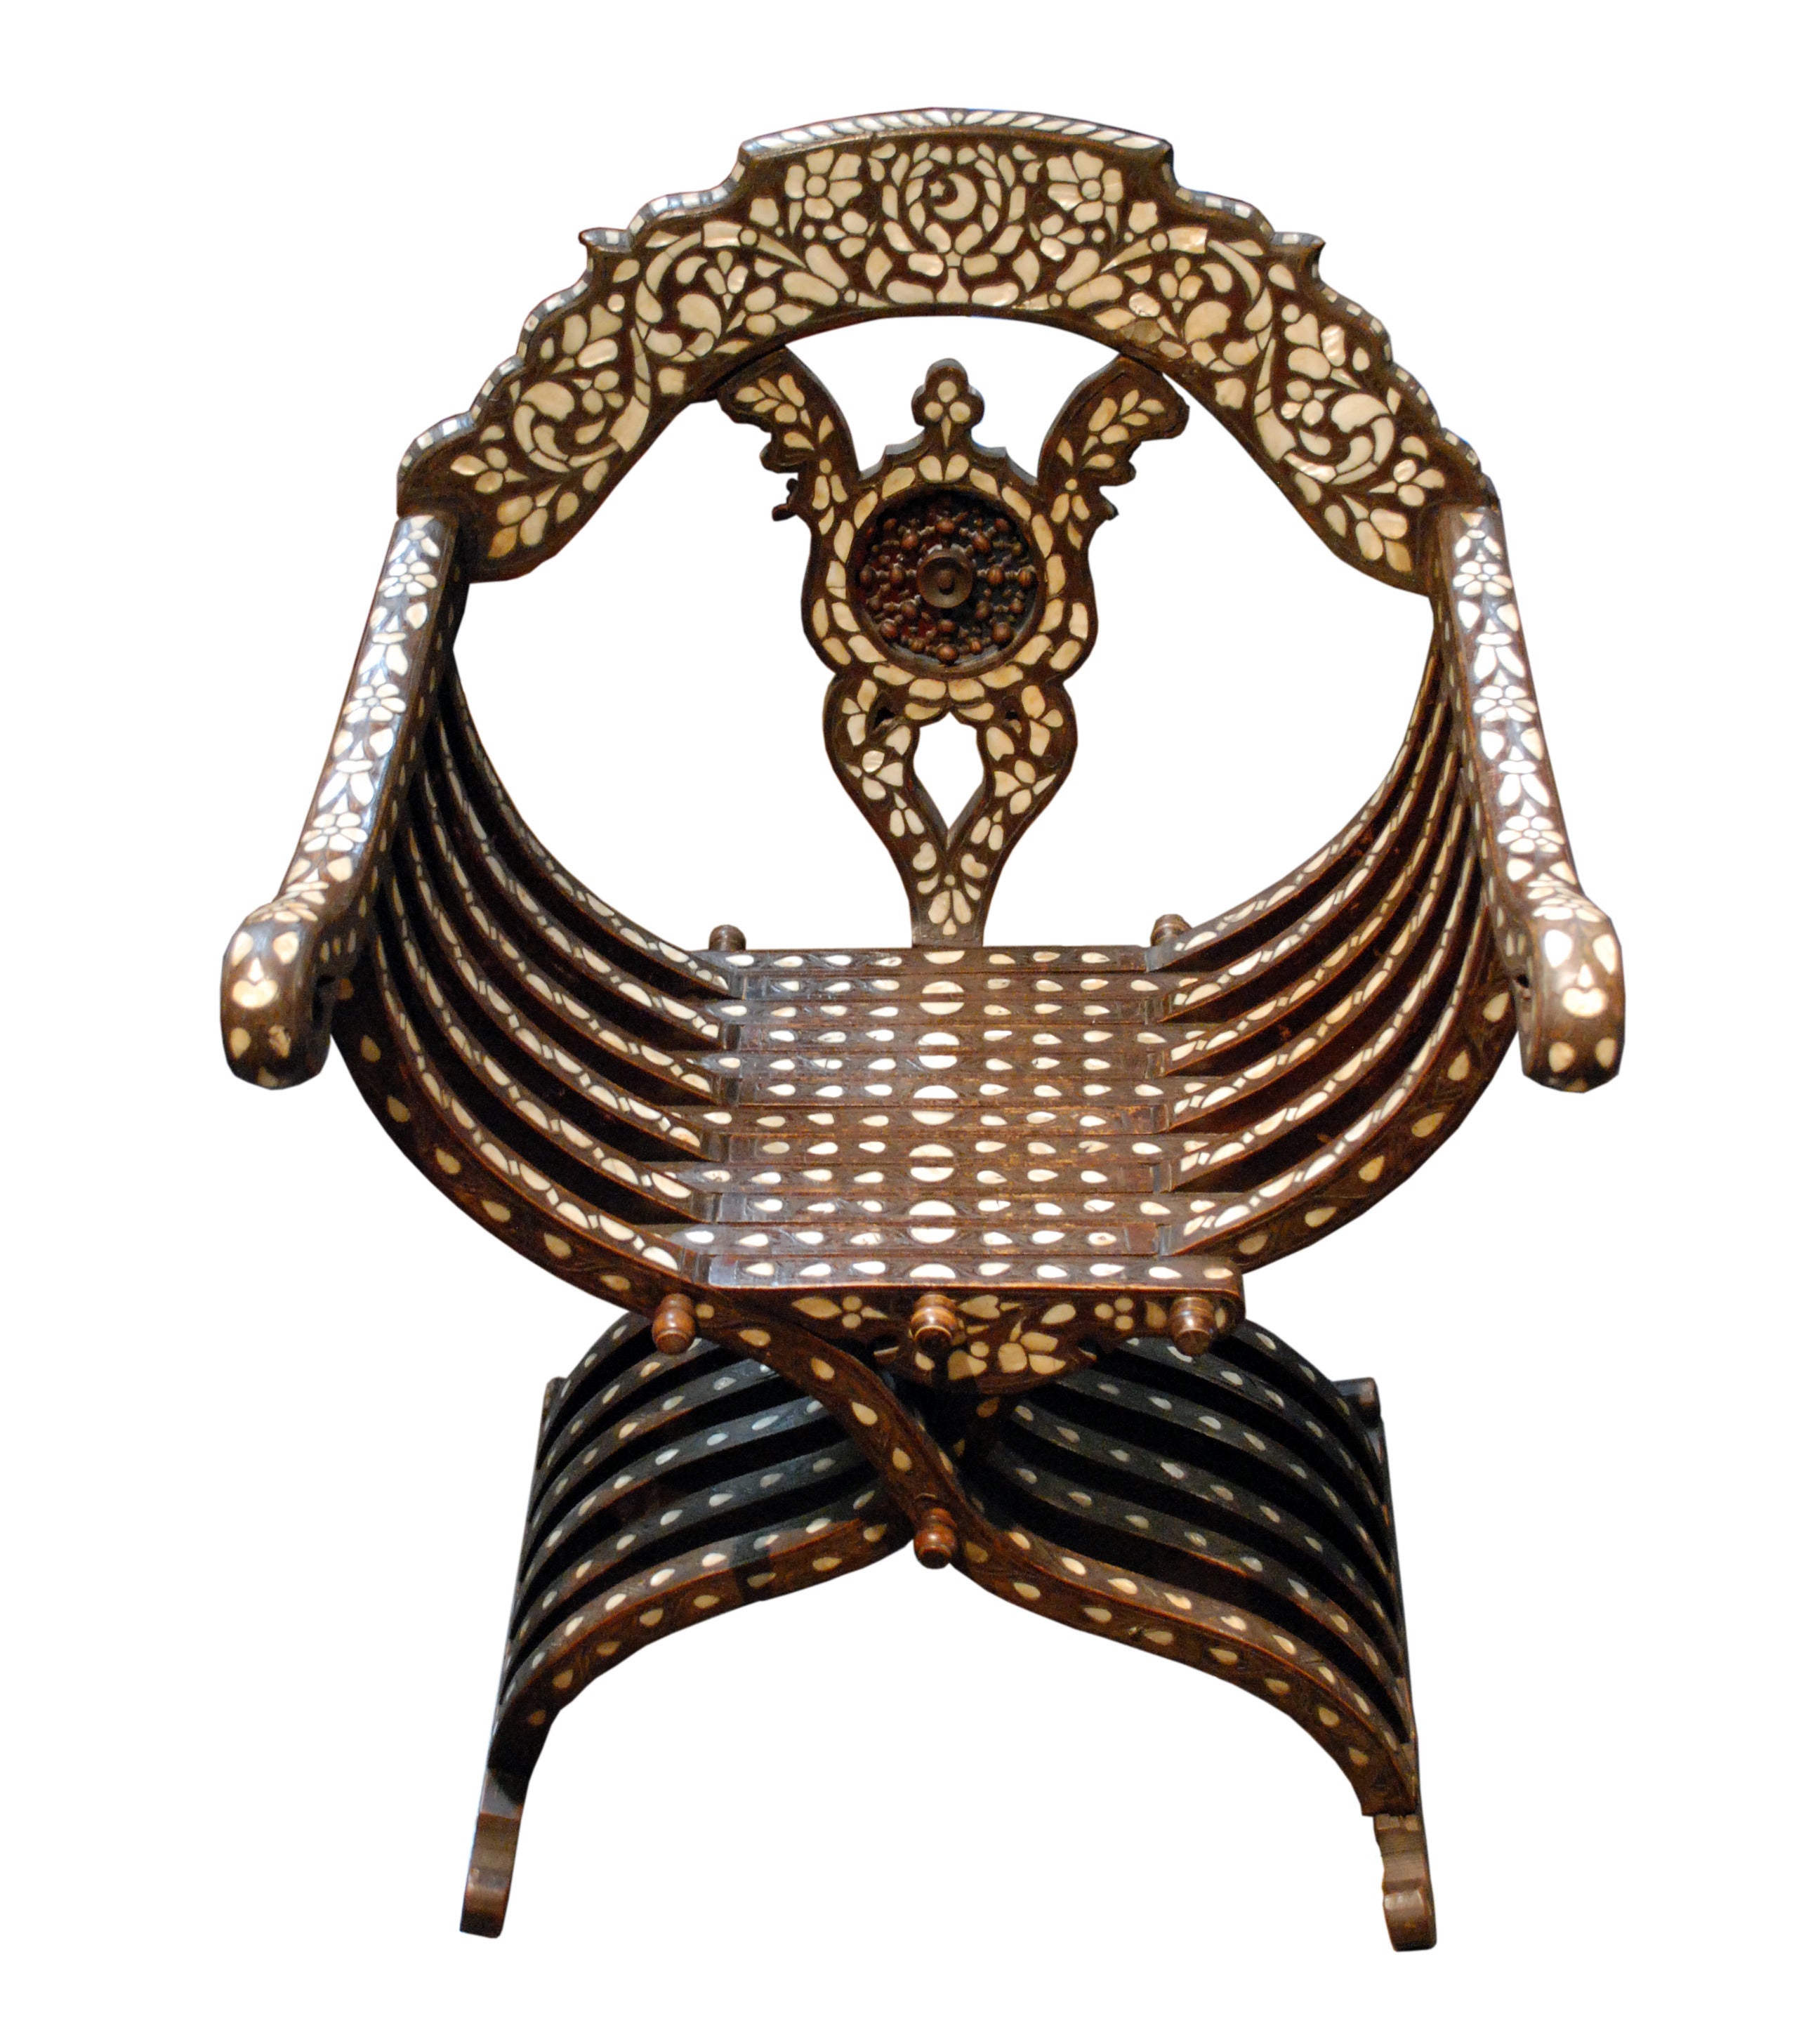 19th Century Syrian Inlaid Chair